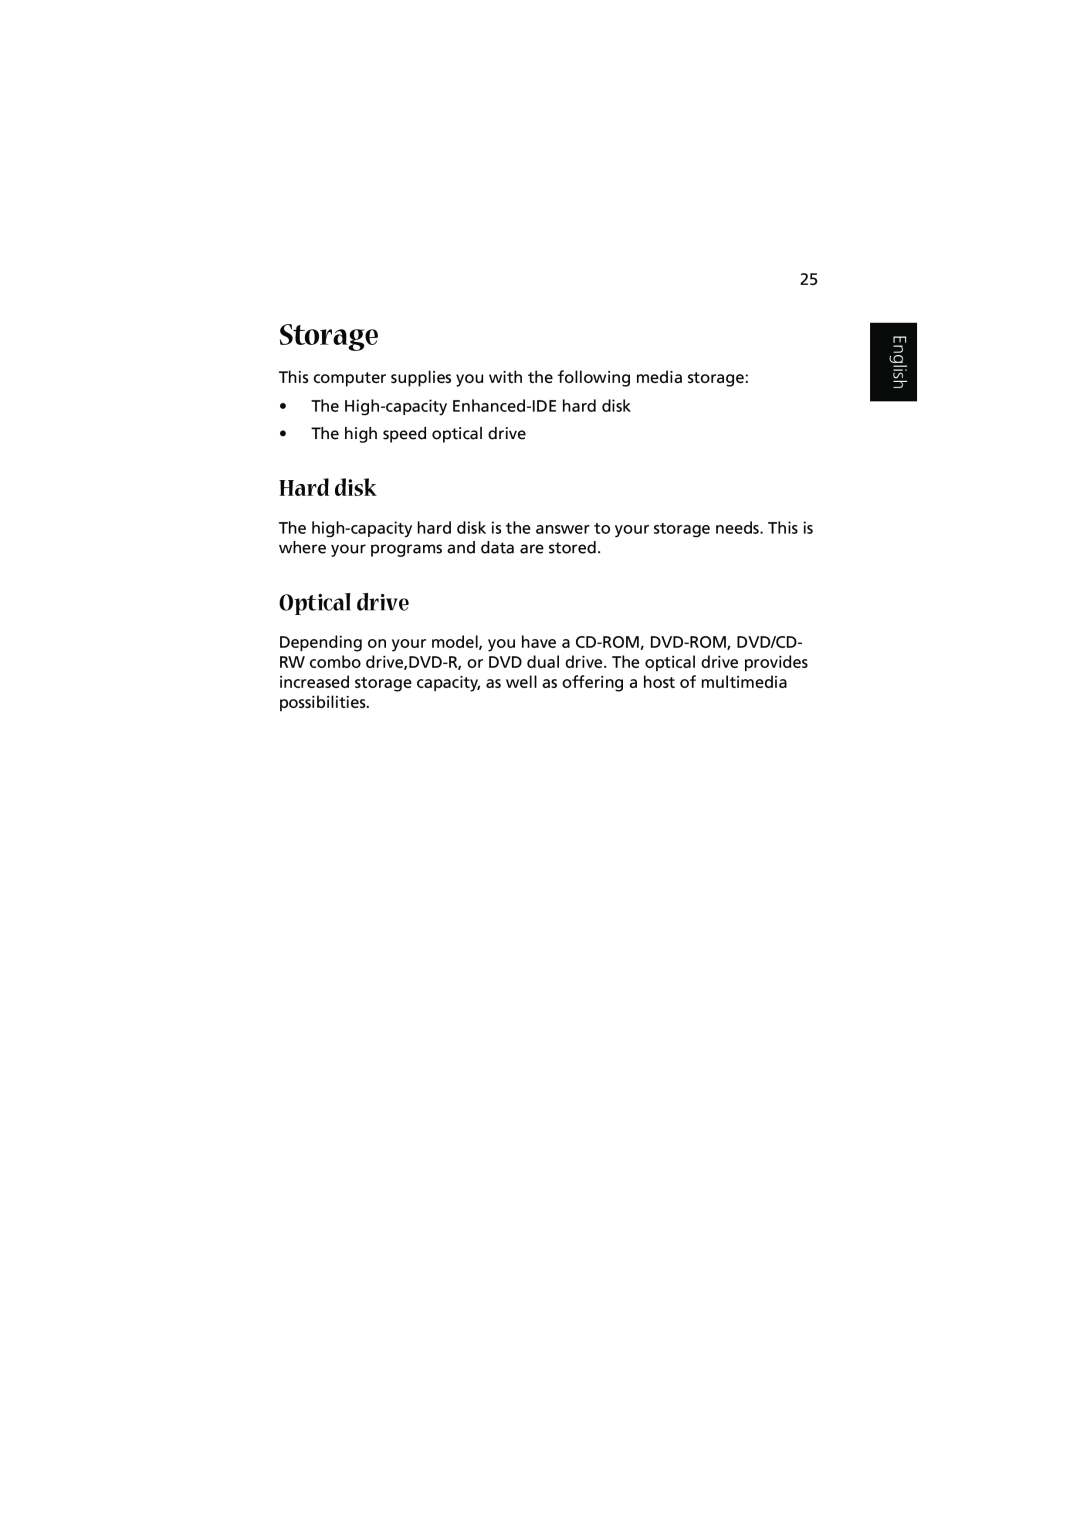 Acer 1450 manual Storage, Hard disk, Optical drive, English 